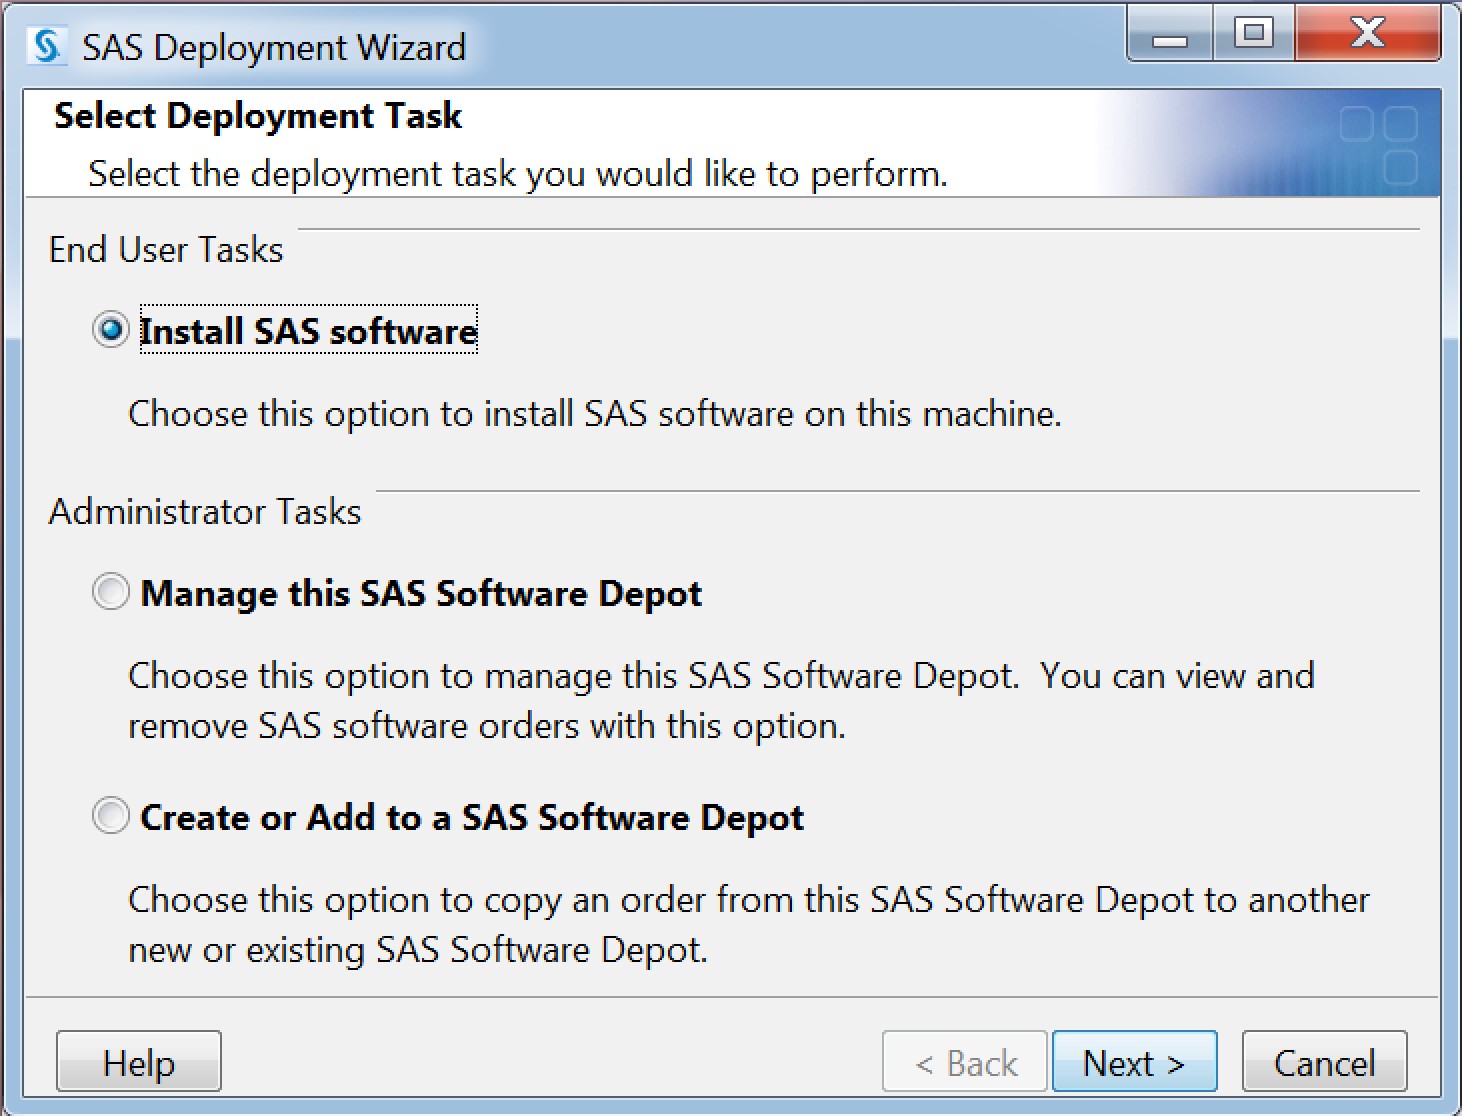 sas 9.3 free download for windows 8